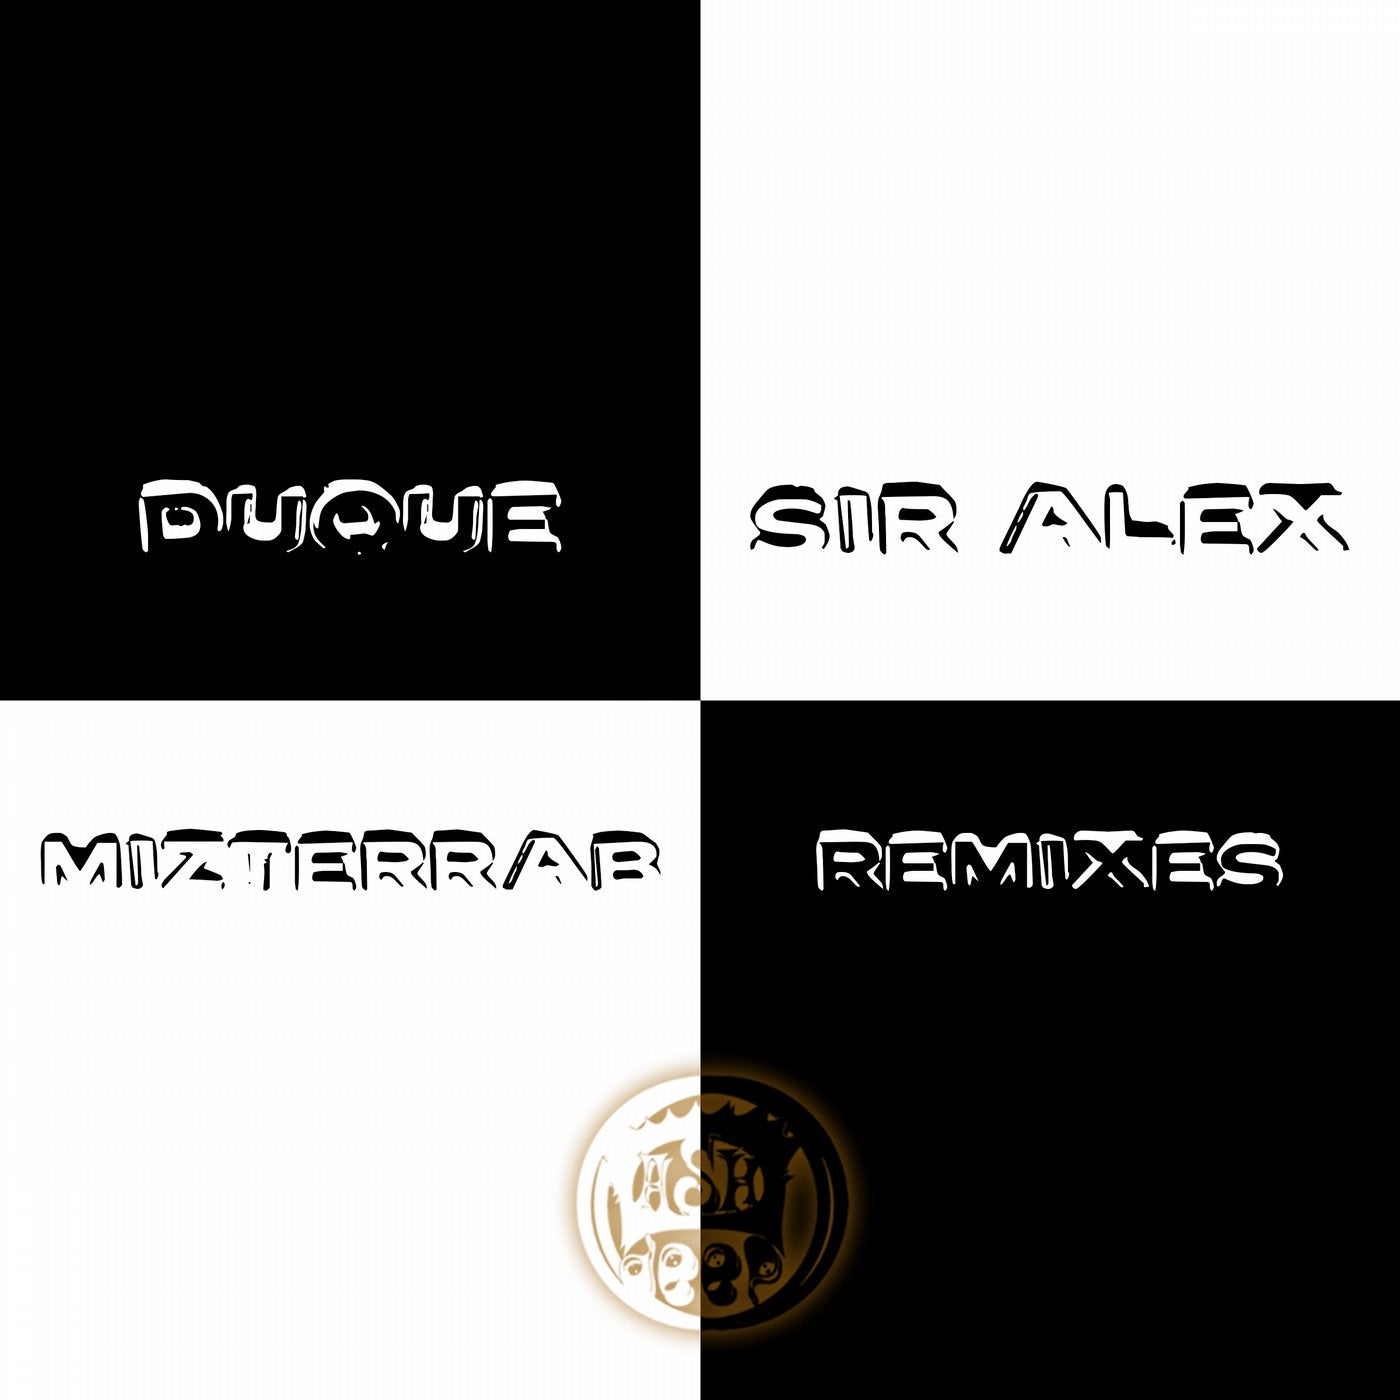 Mizterrab Remixes